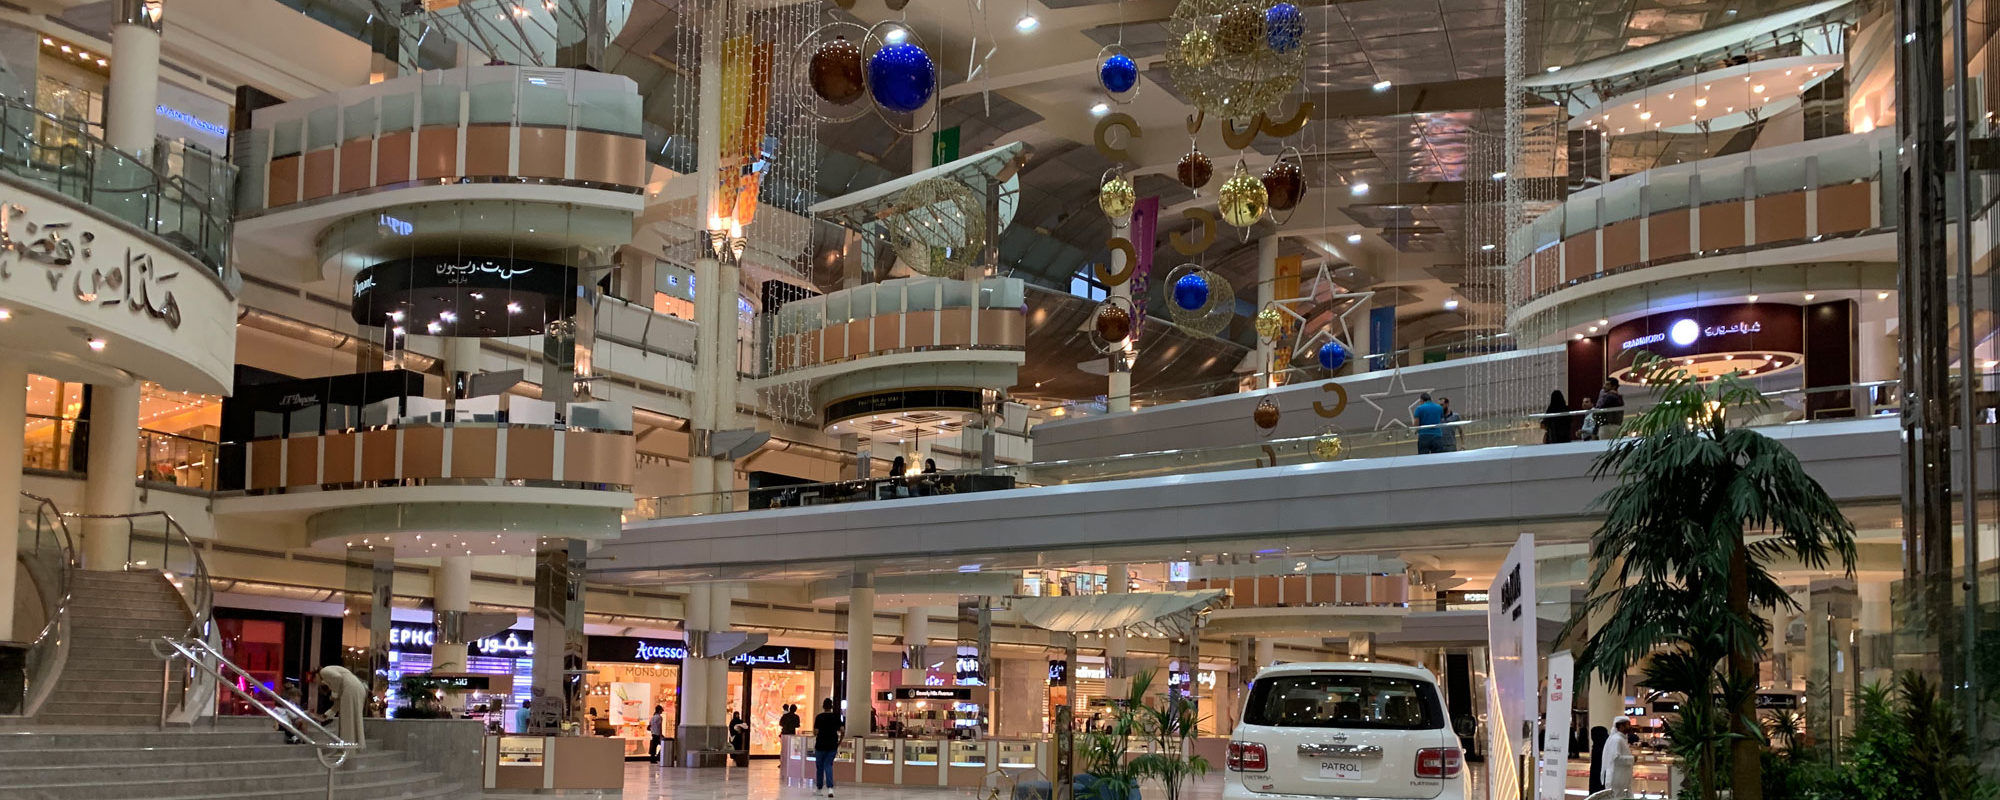 new balance mall of arabia